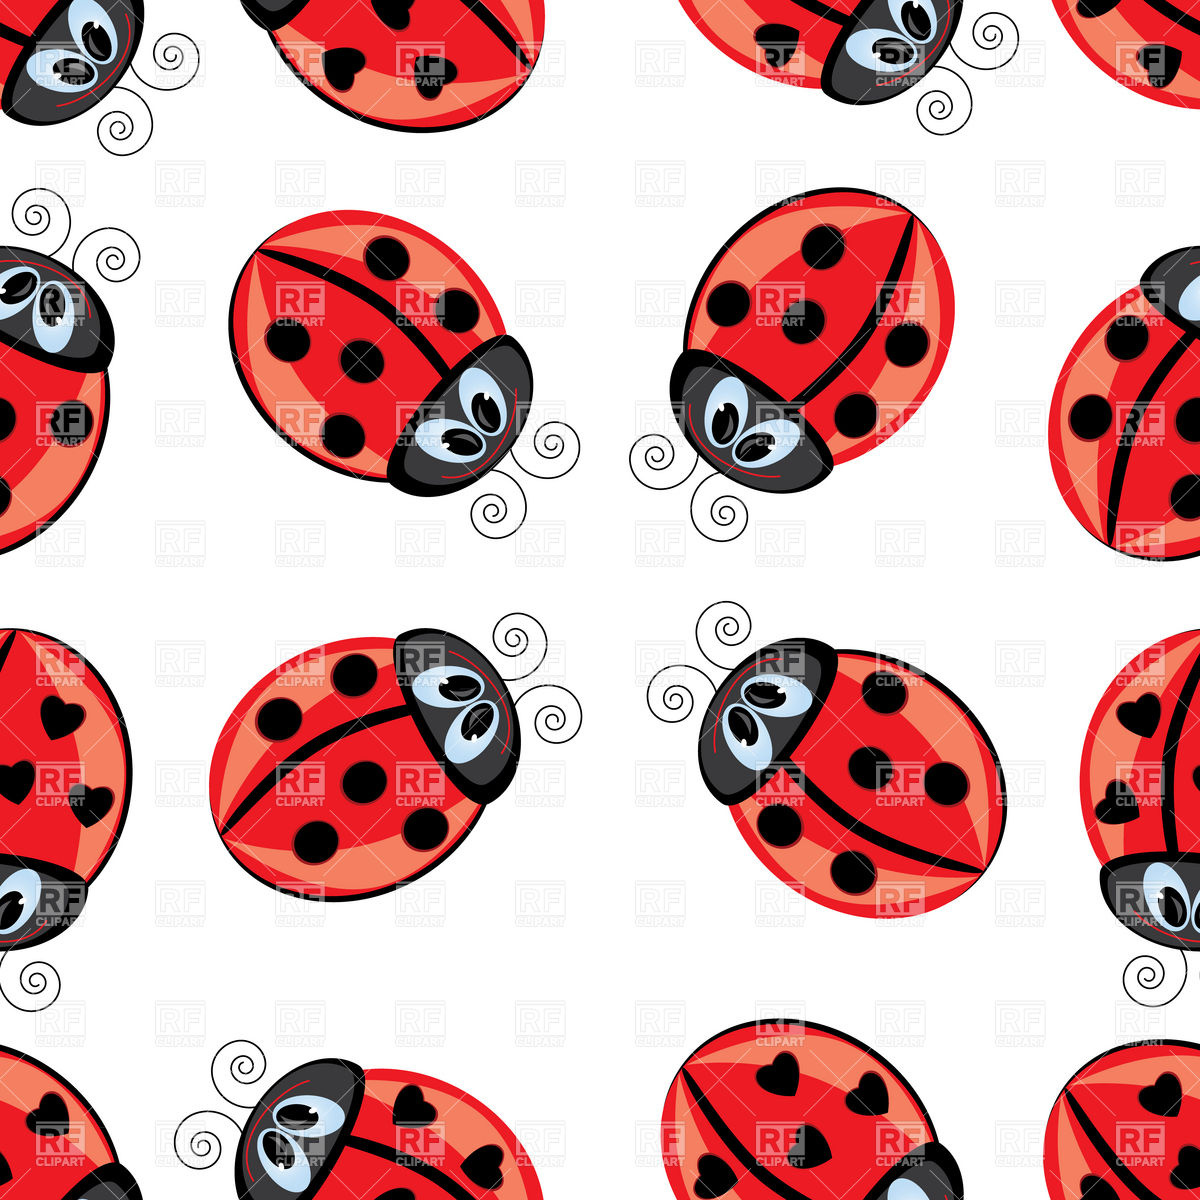 cute ladybug cartoon wallpaper